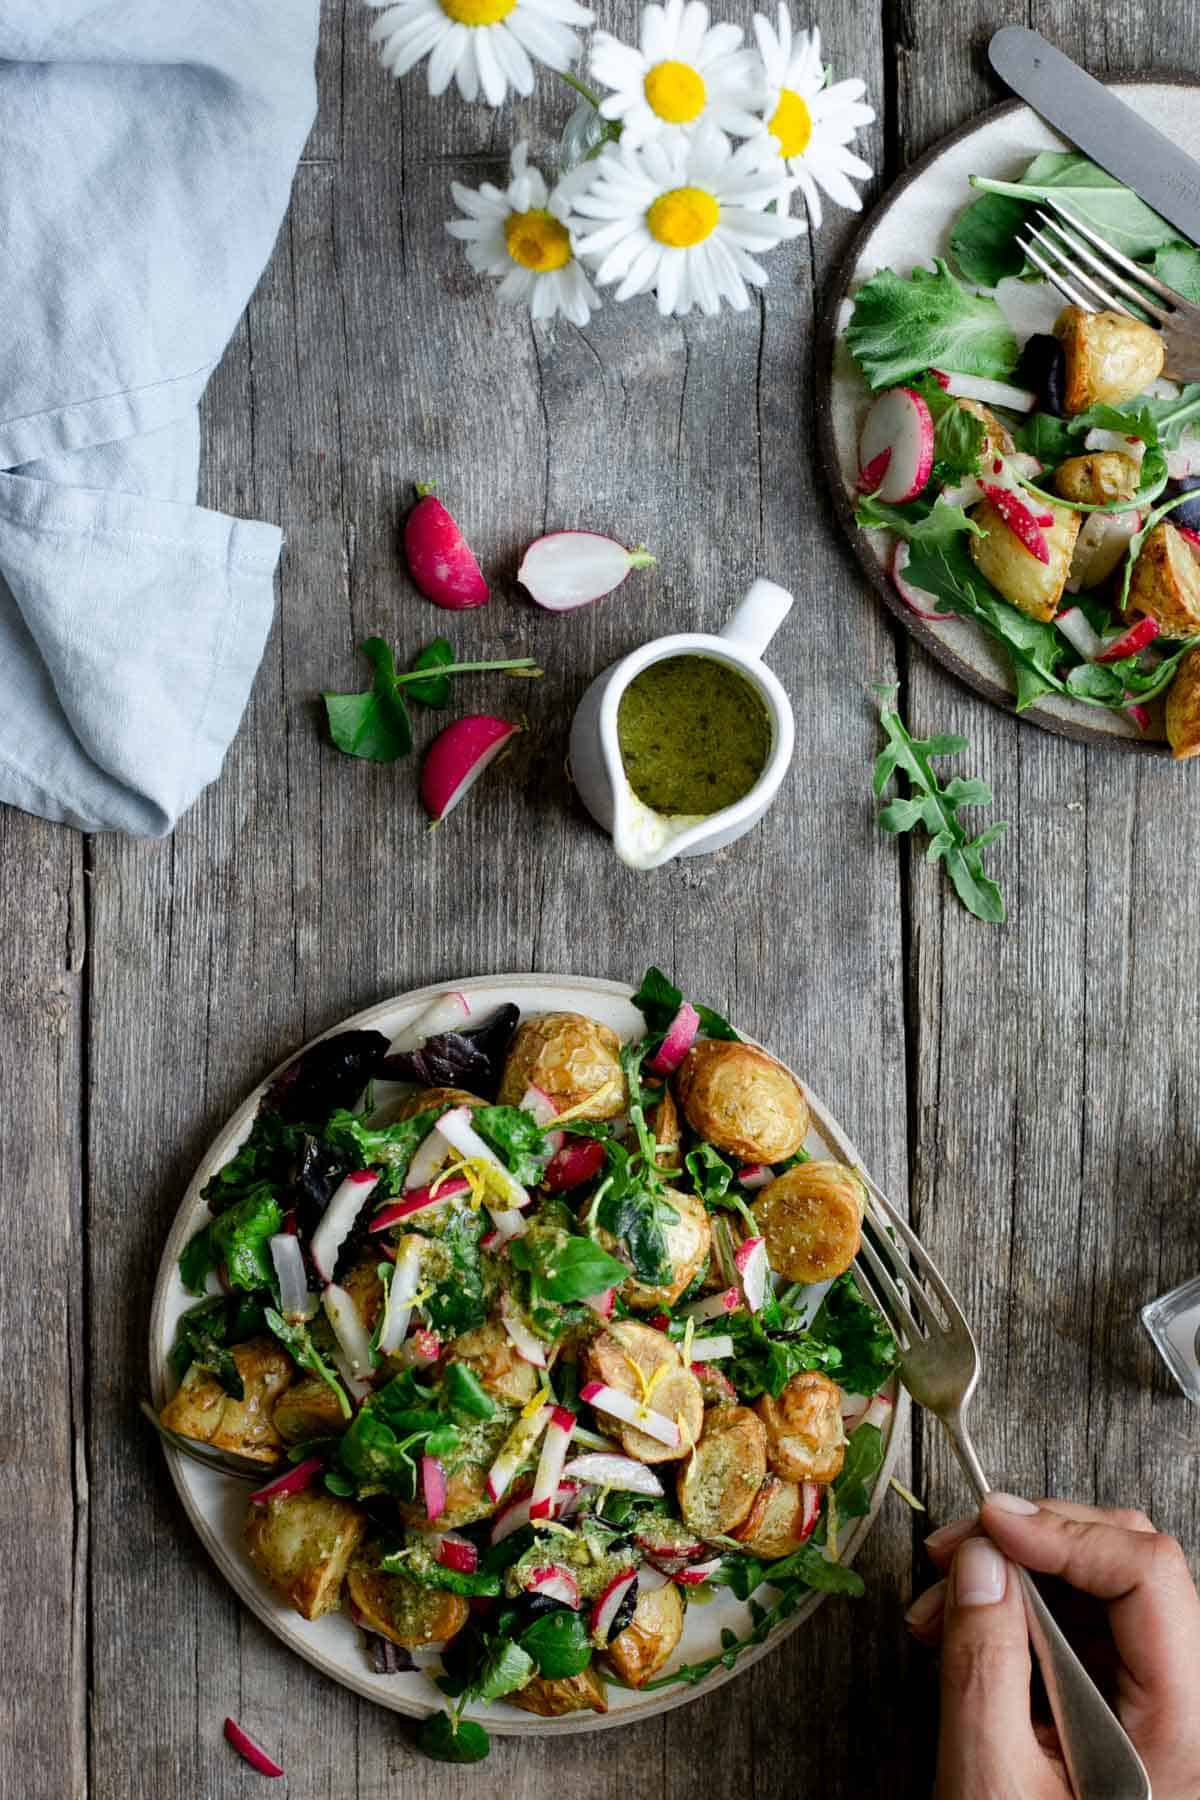 Quick and delicious roasted new potato salad with pesto #dairyfree #healthyrecipe #foodphotography | via @annabanana.co